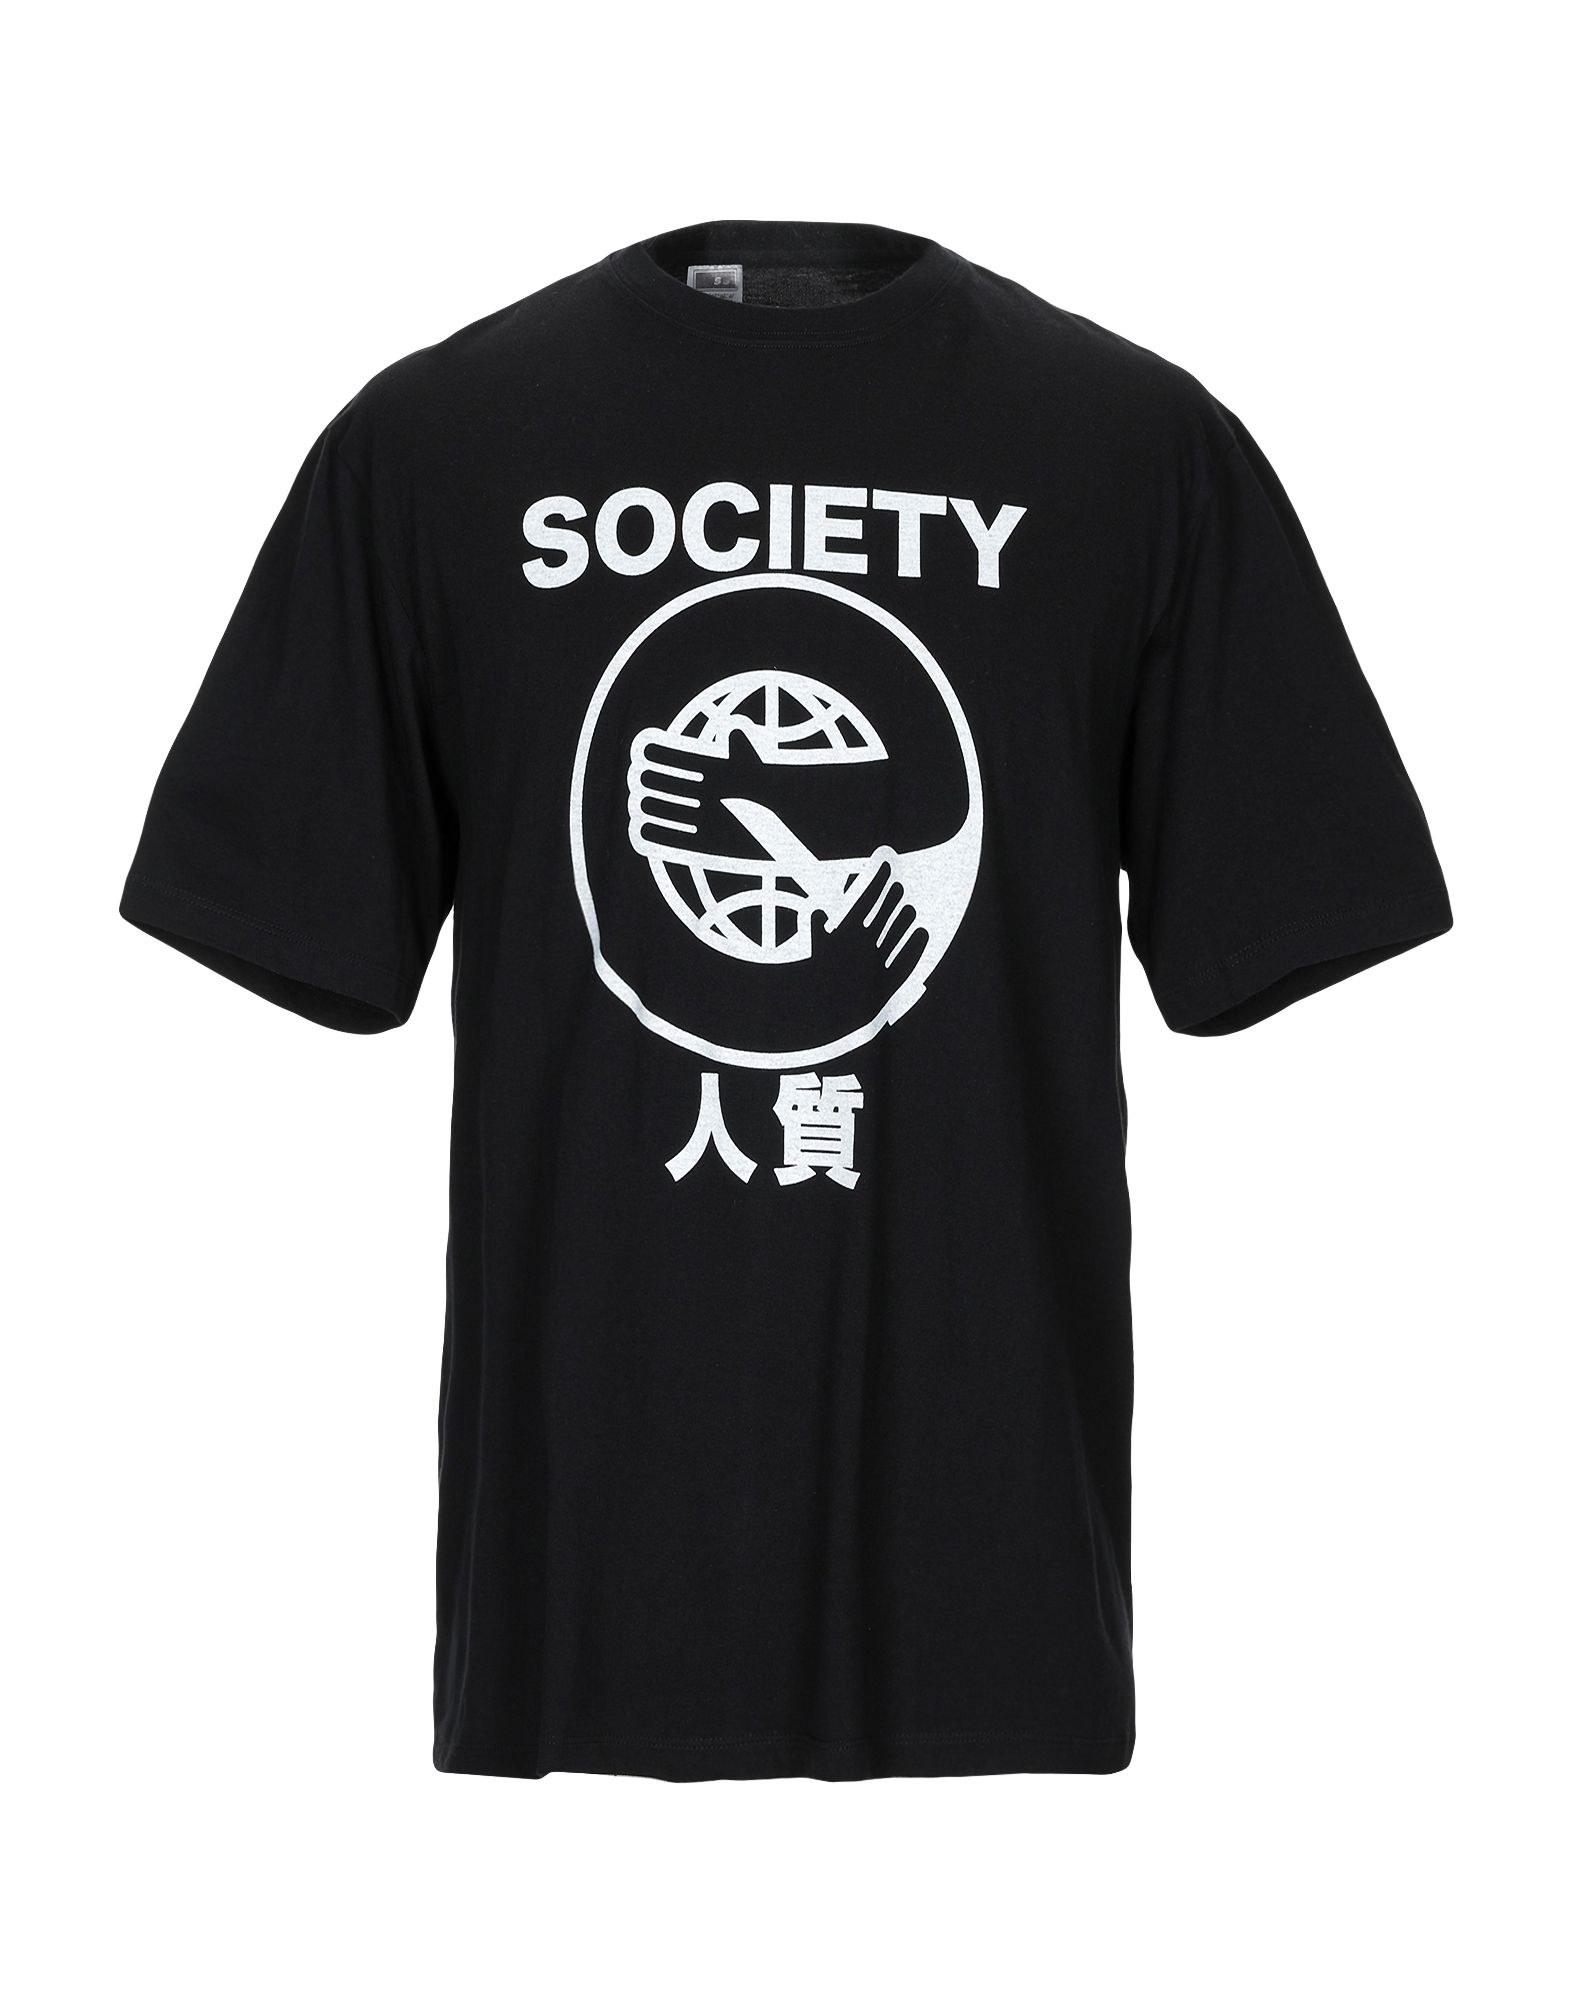 Футболка Lost Society. Pothead Society футболка. Foreign Society футболка. Legends North Shore so Siti футболка.